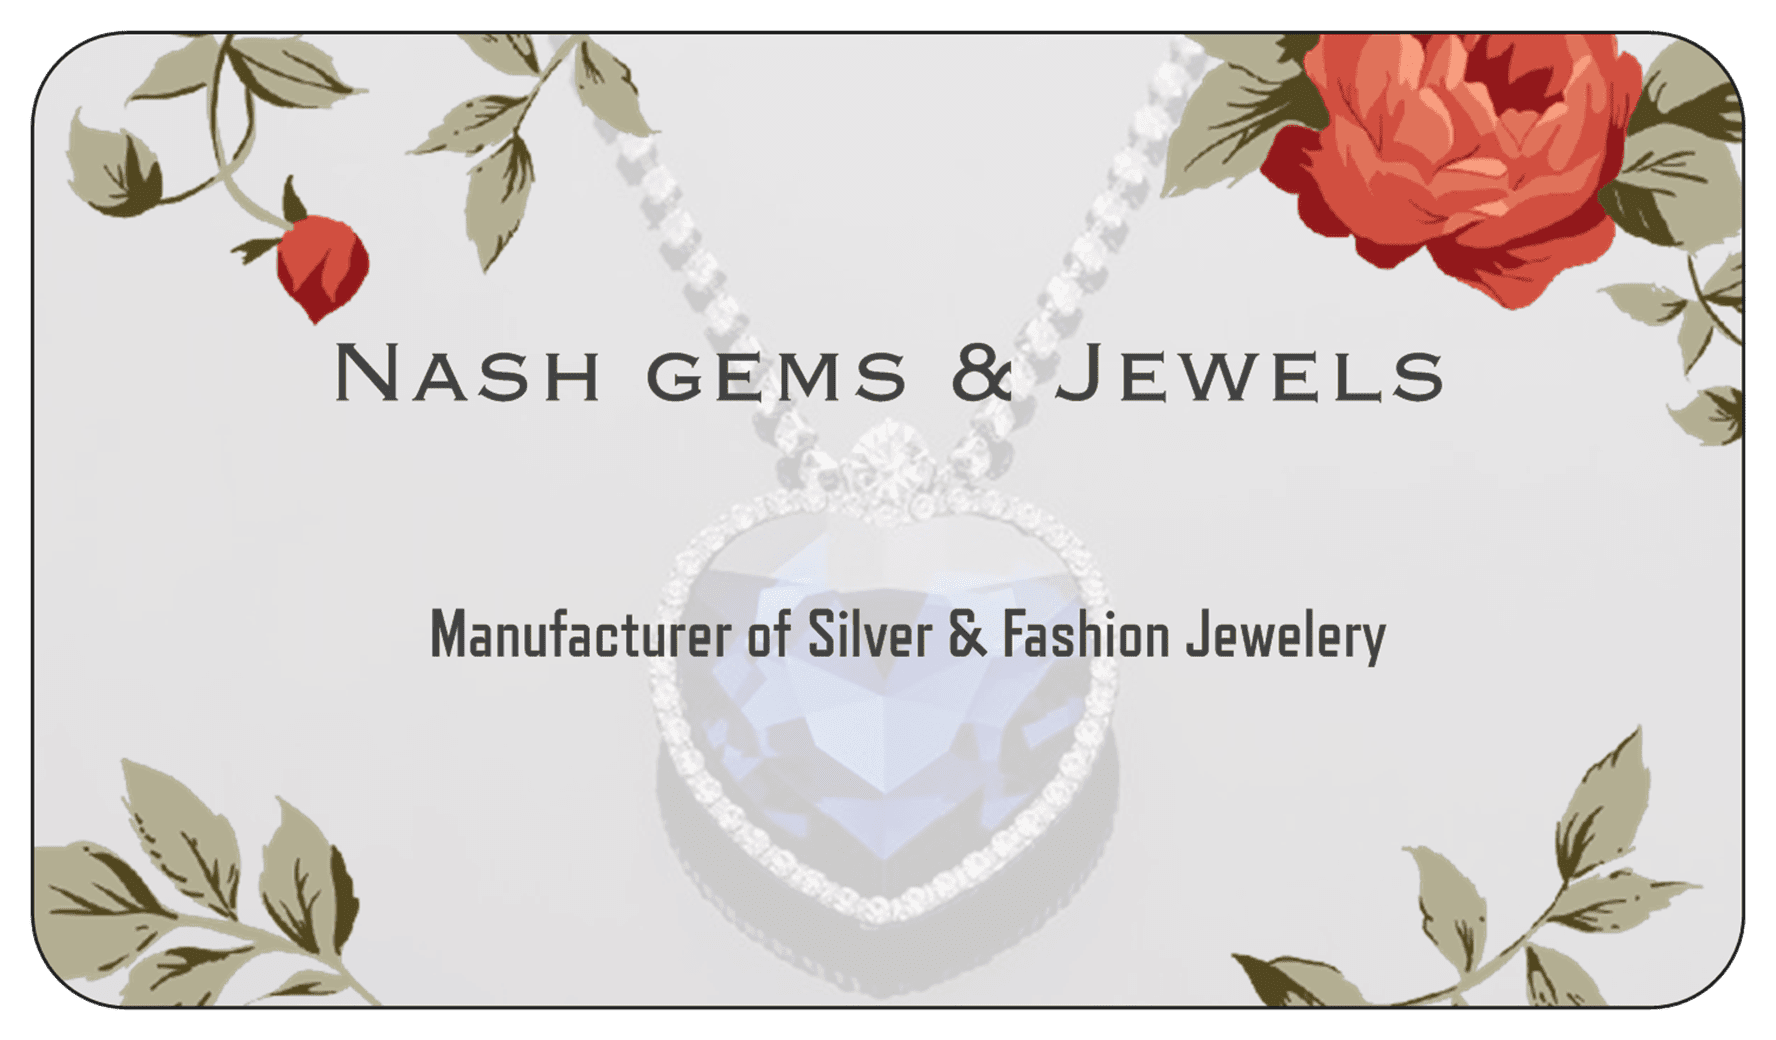 Nash Gems & Jewels